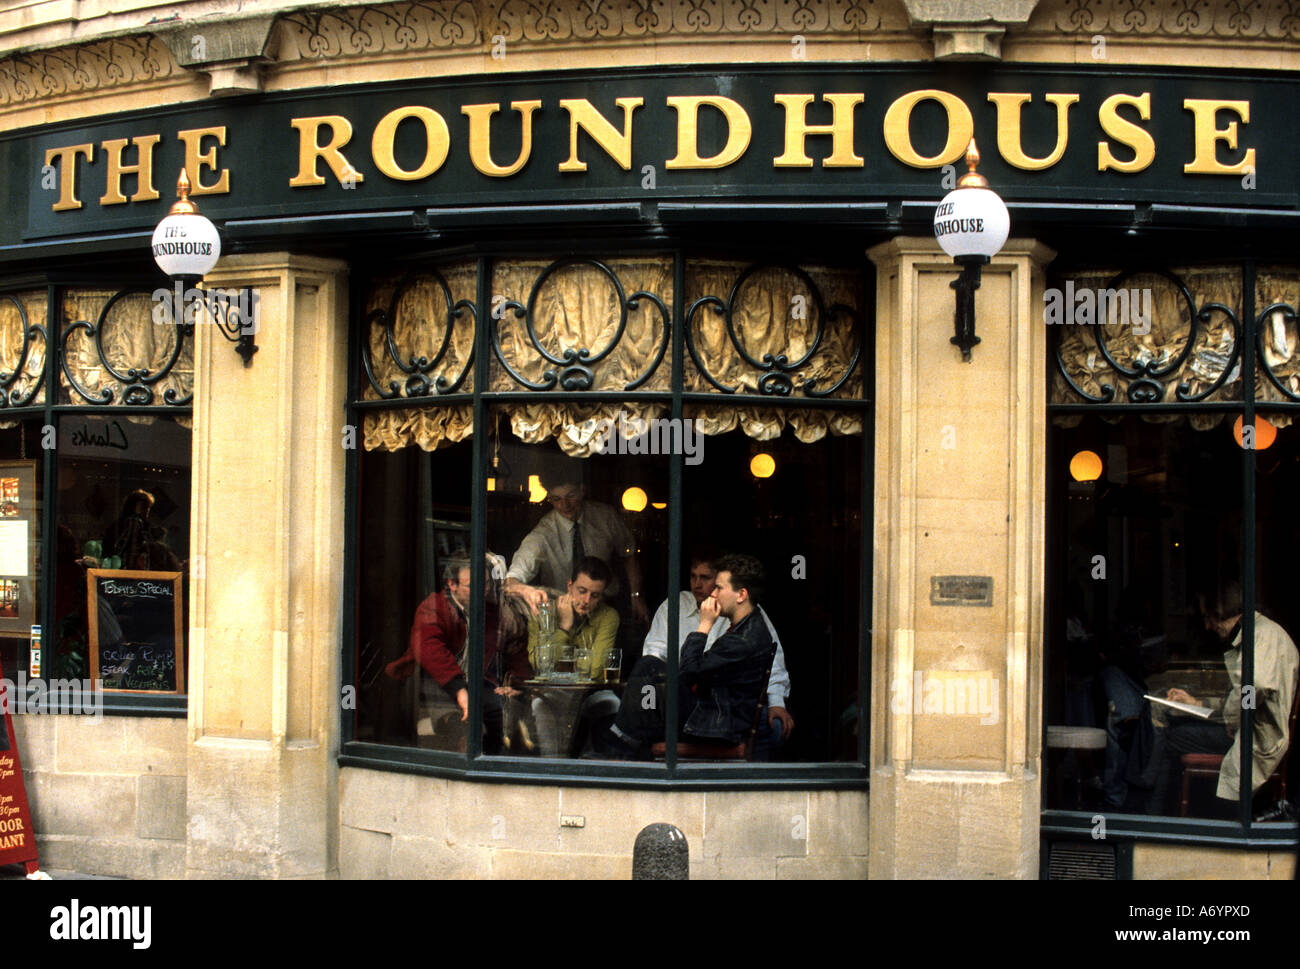 Roman Bath historic England Pub Bar Restaurant the roundhouse Stock Photo